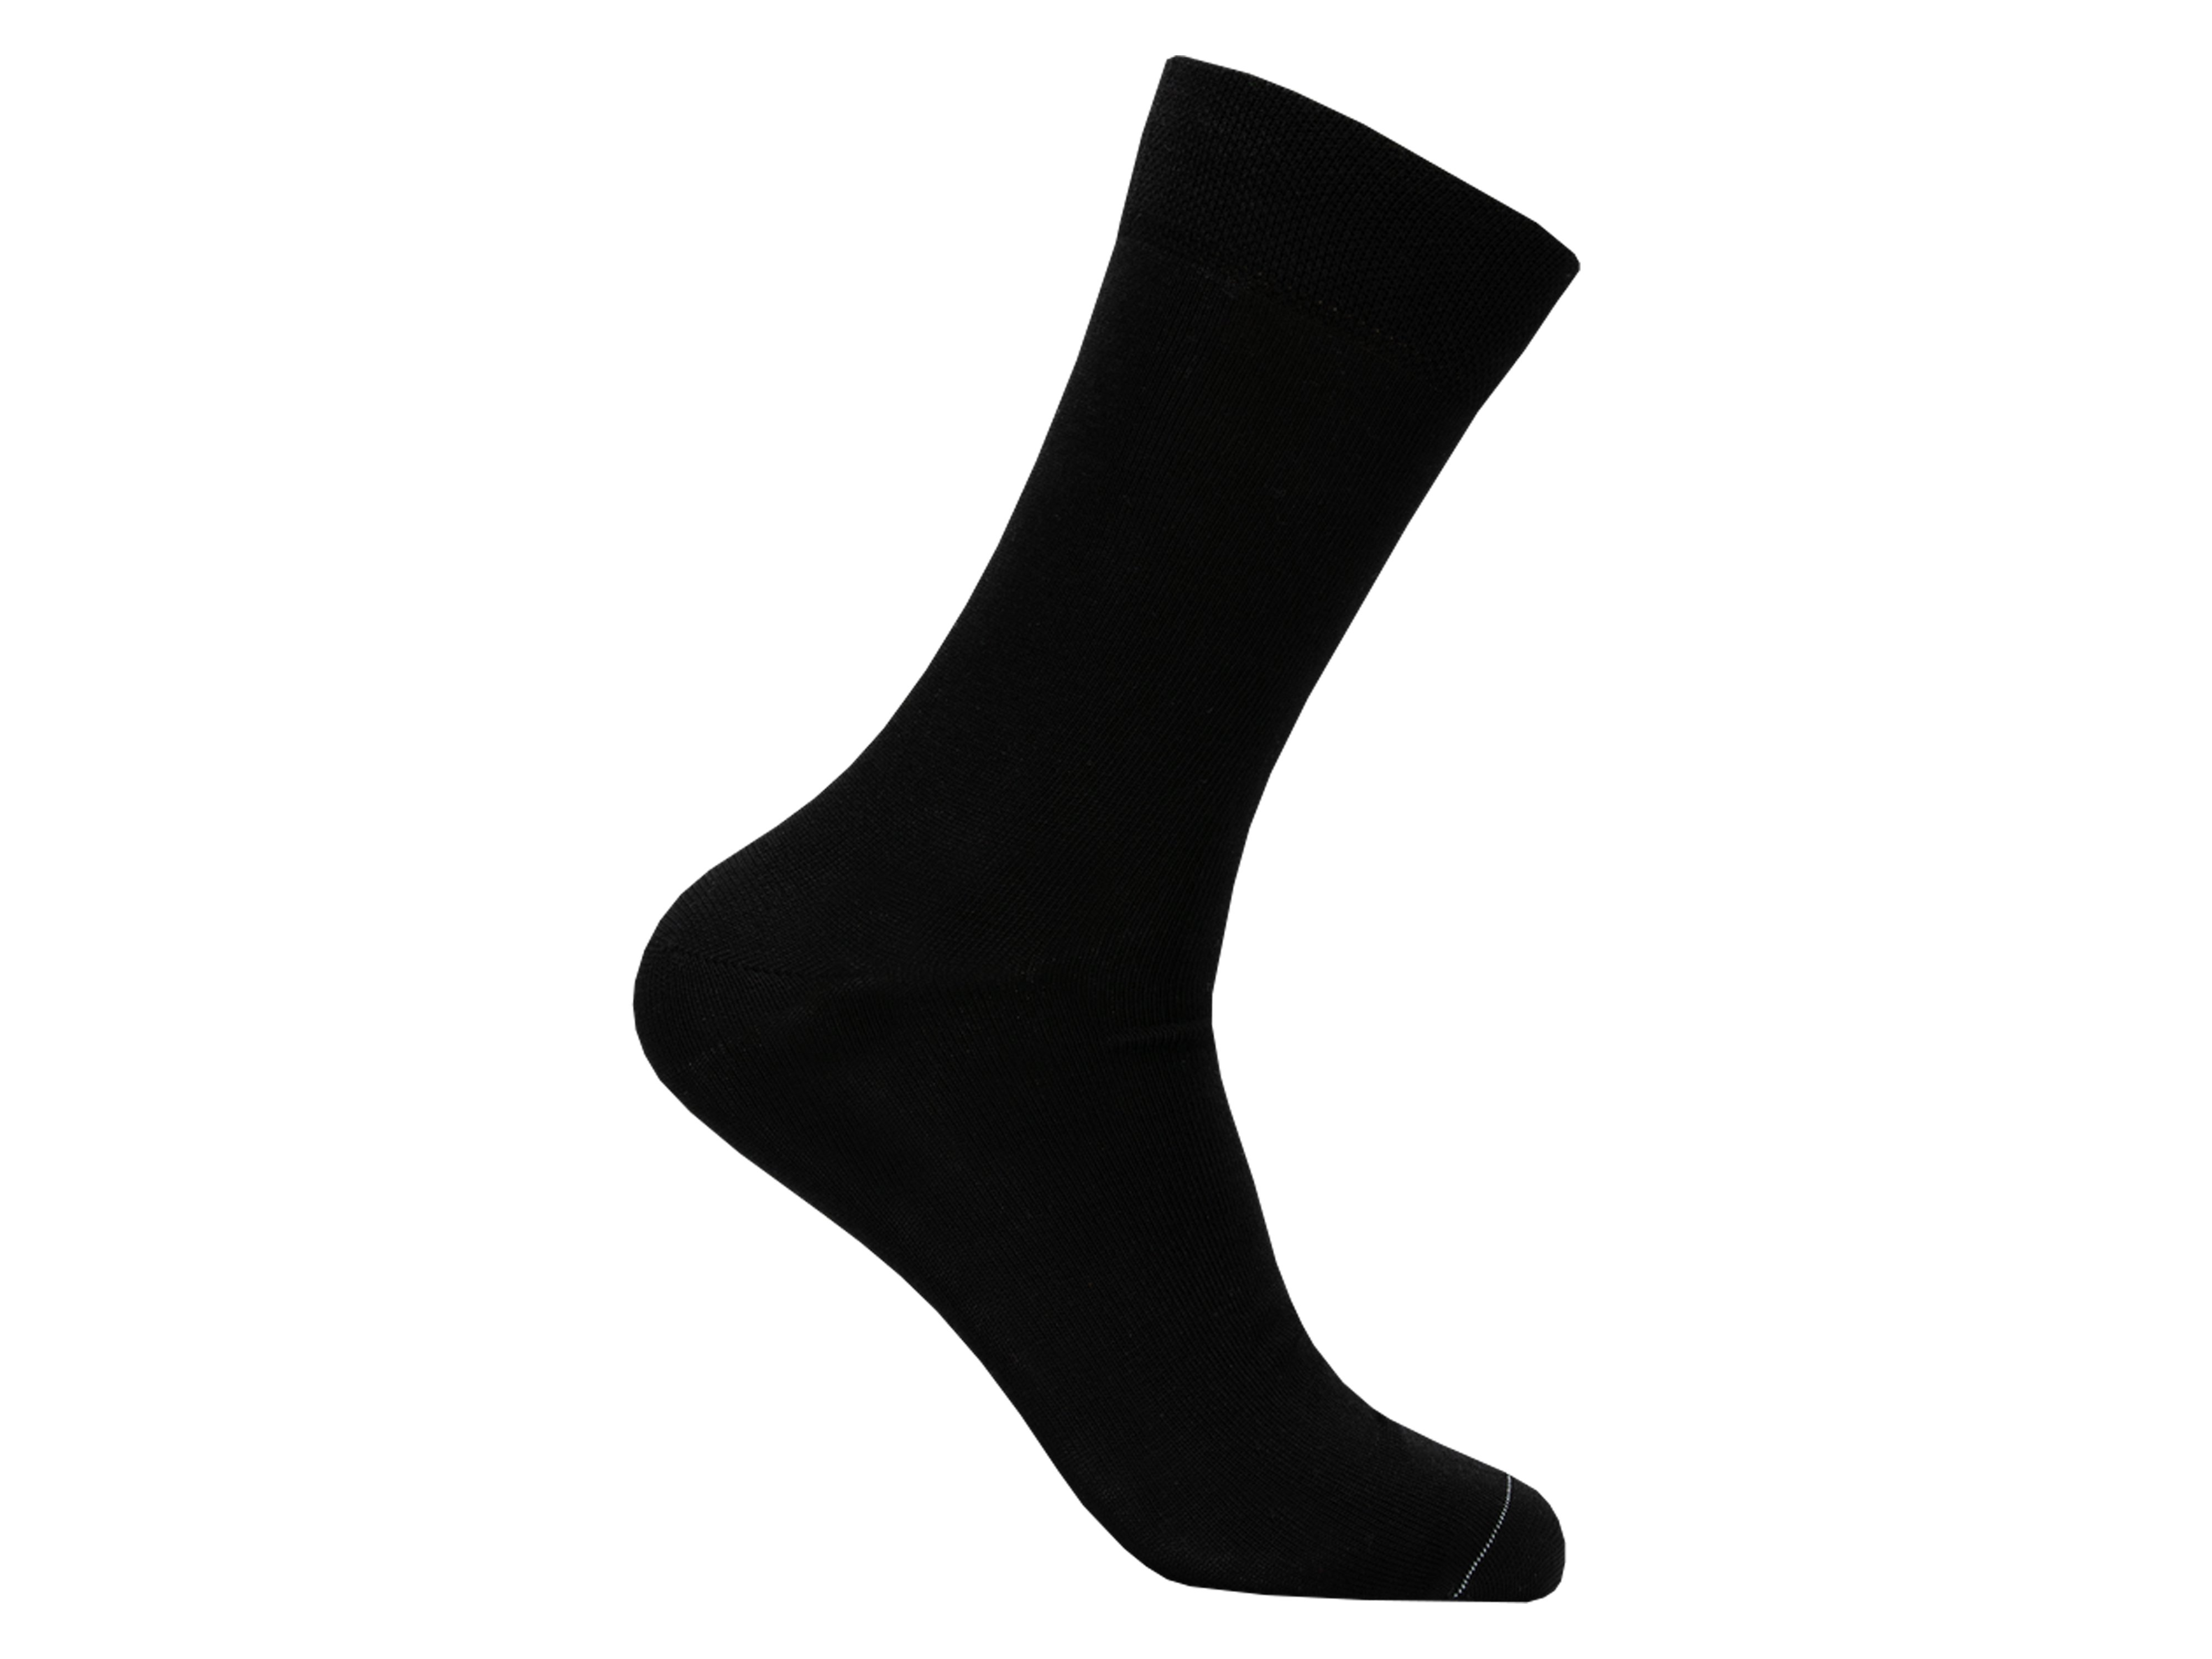 LY by Tufte Crew Sock Black Beauty, Størrelse 36-40, 1 par.